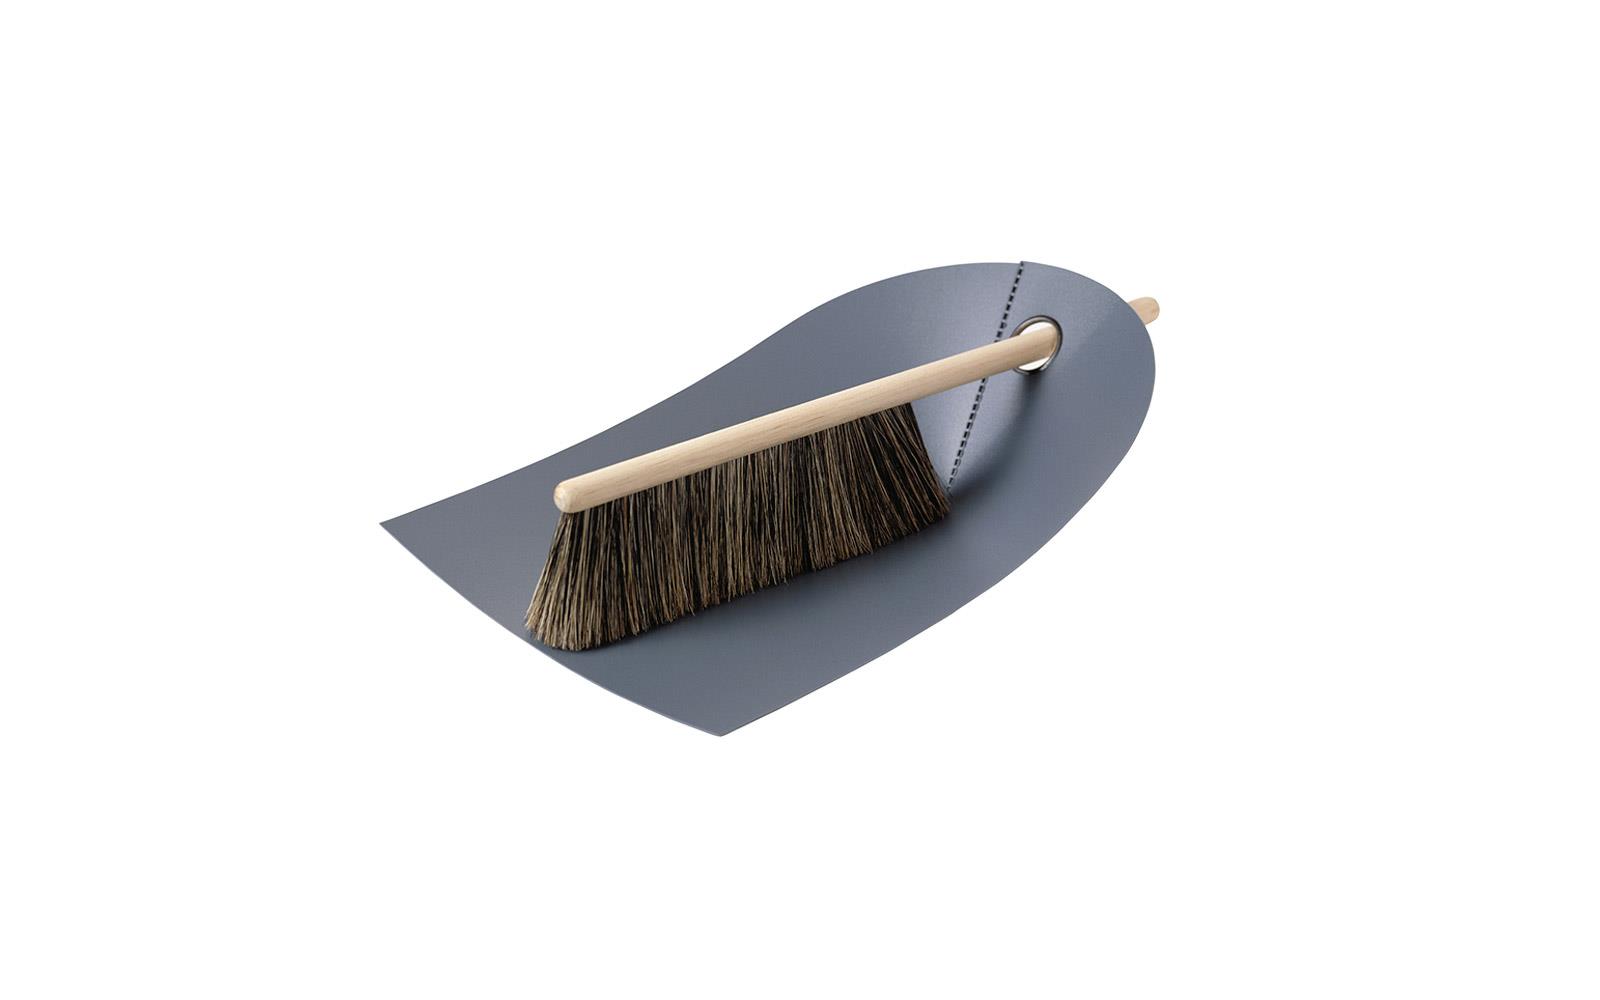 Dustpan  Broom1